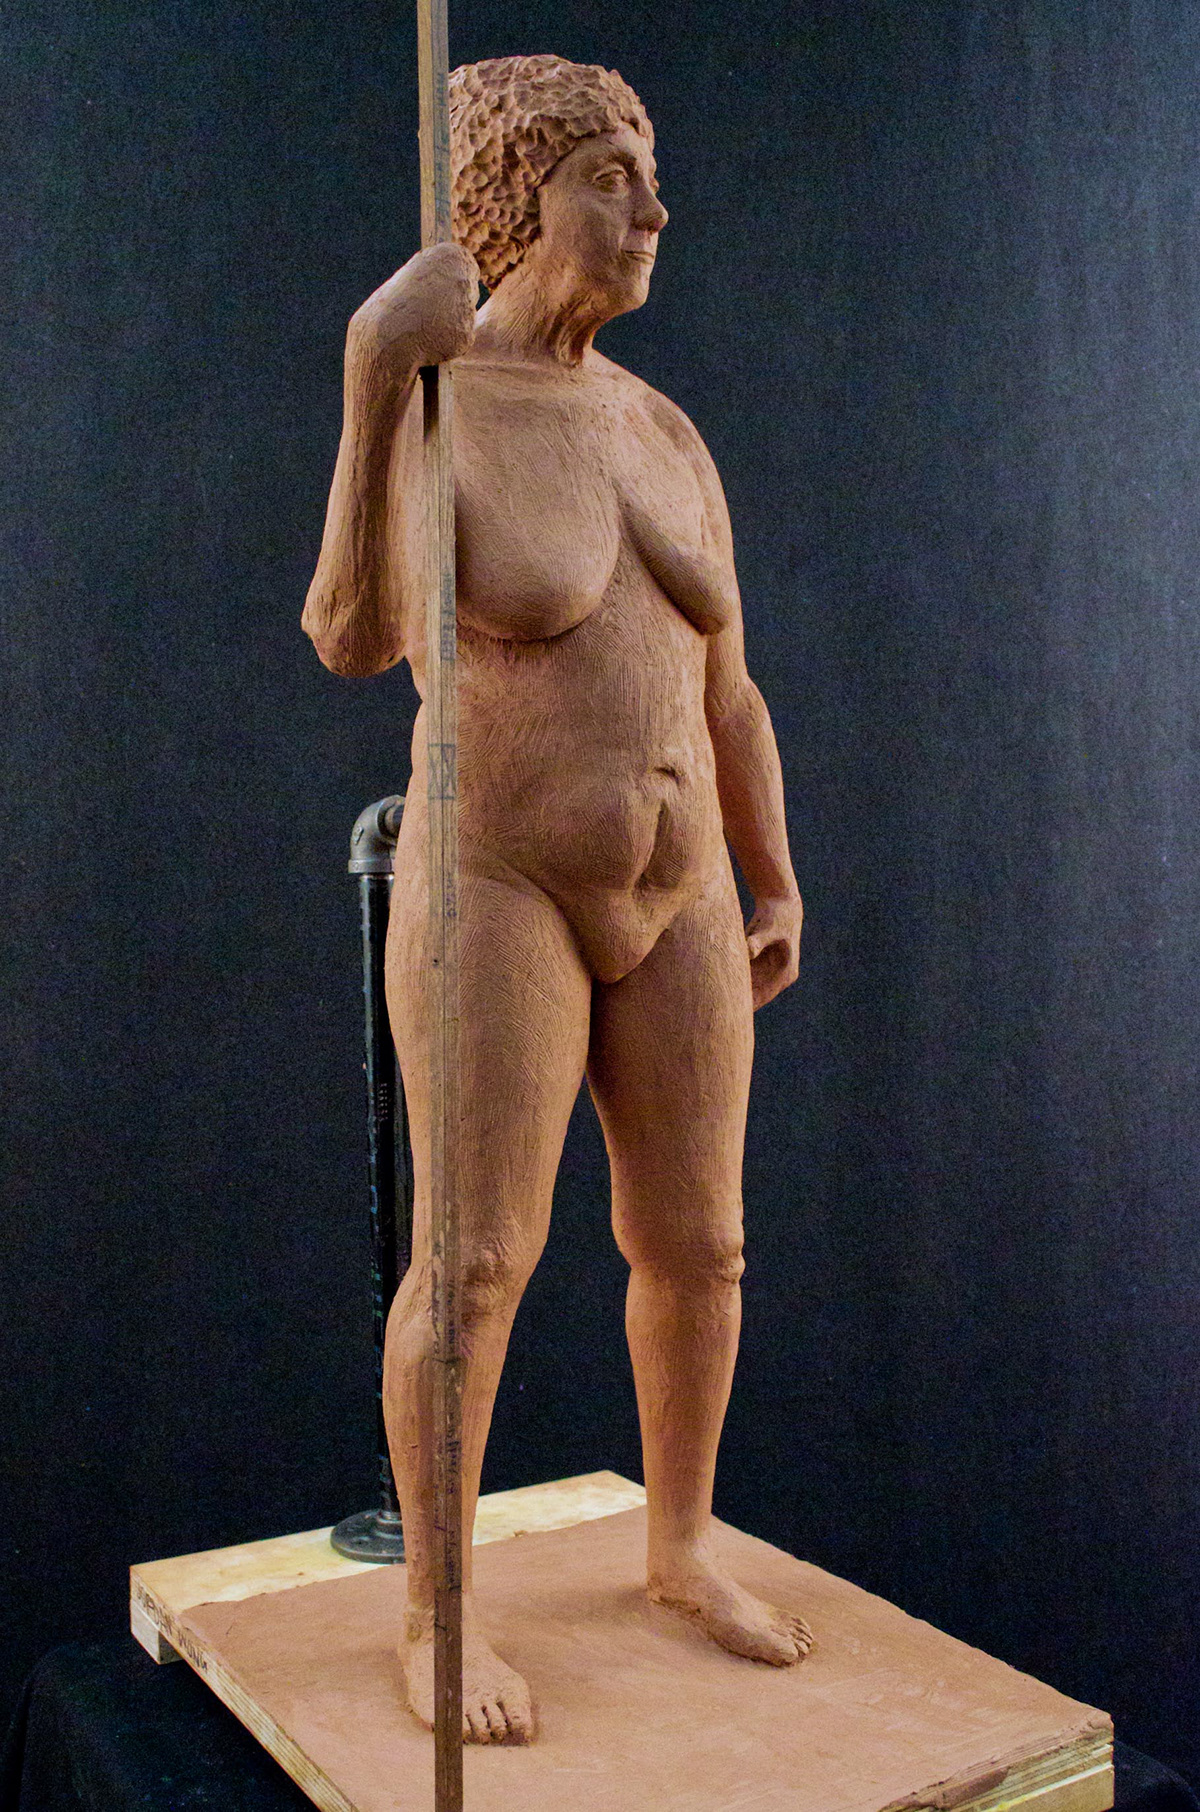 plaster figure modeling standing figure Plasticine